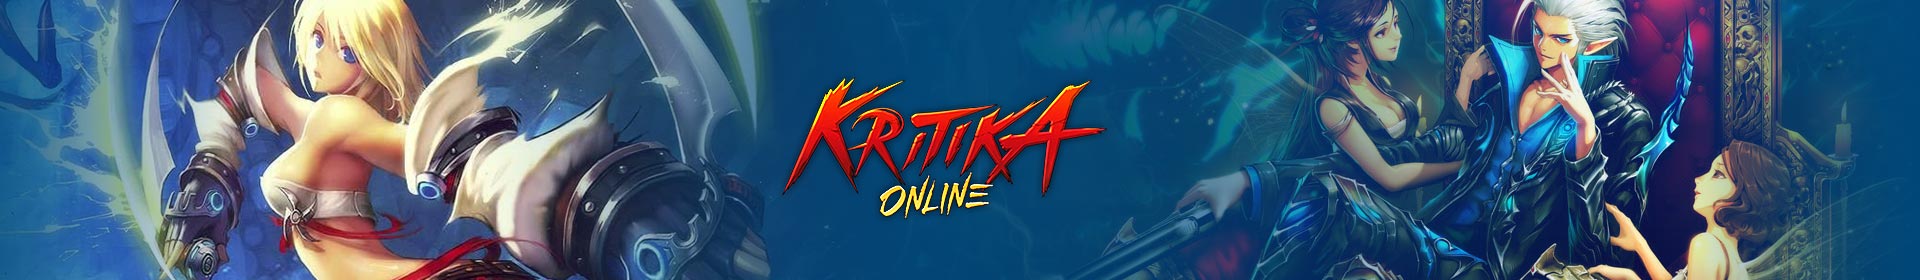 Kritika Online Gold